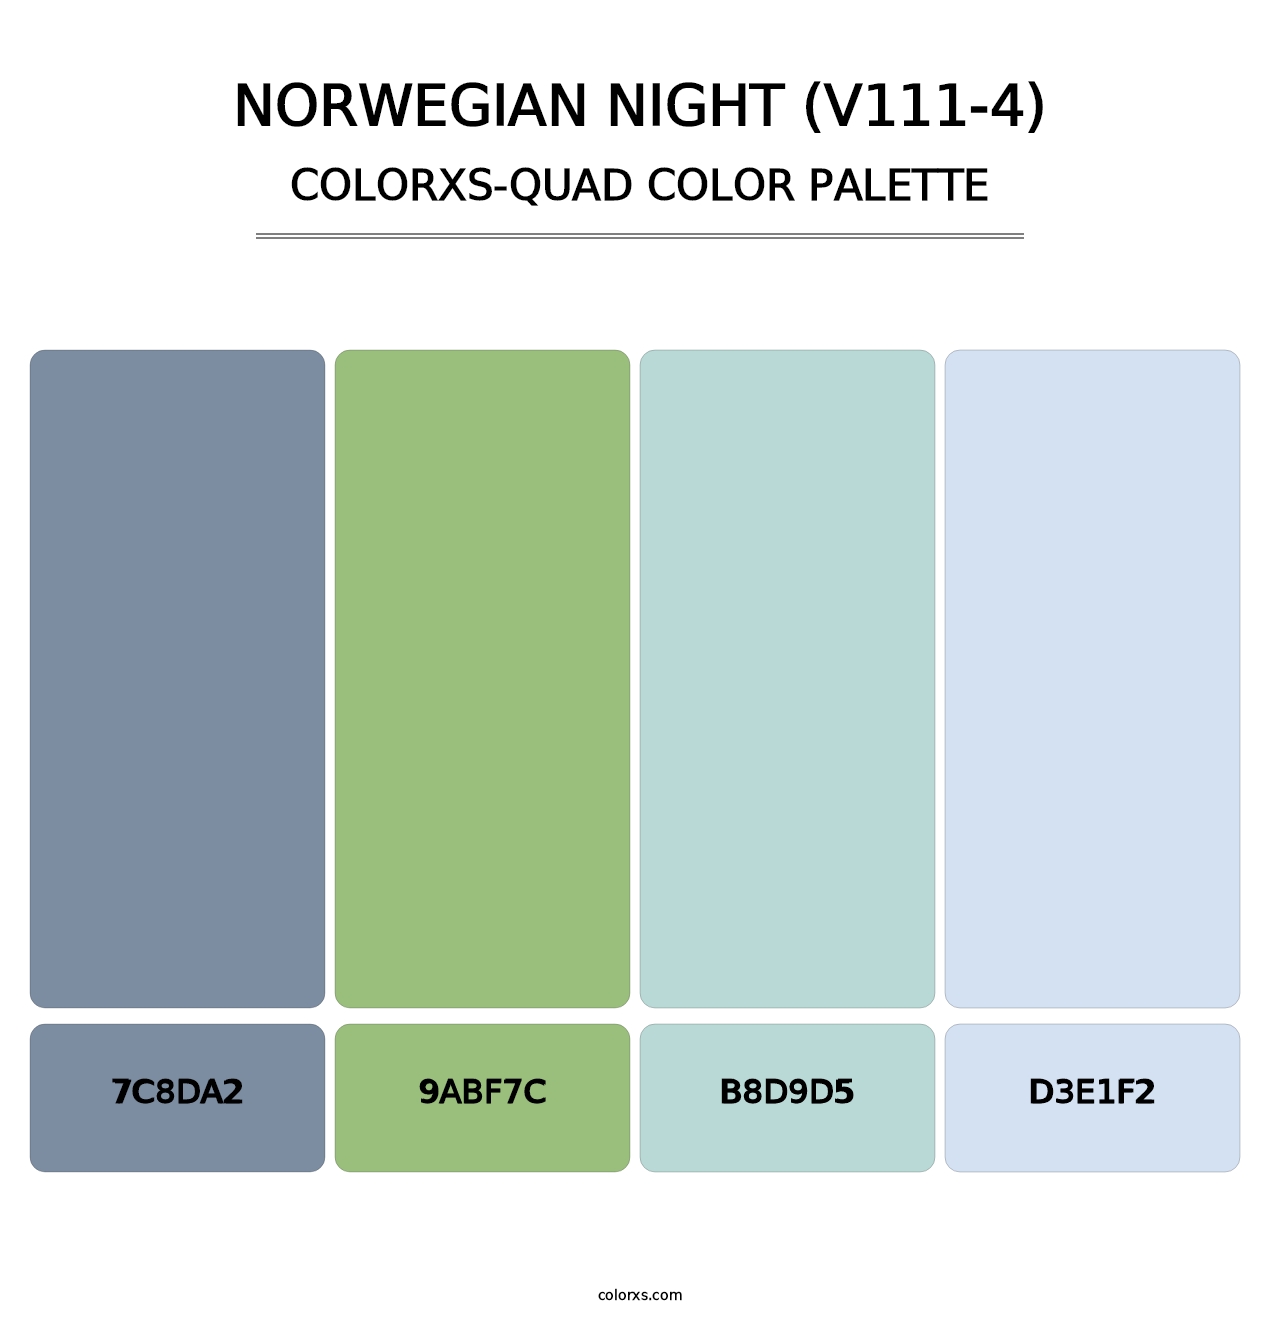 Norwegian Night (V111-4) - Colorxs Quad Palette